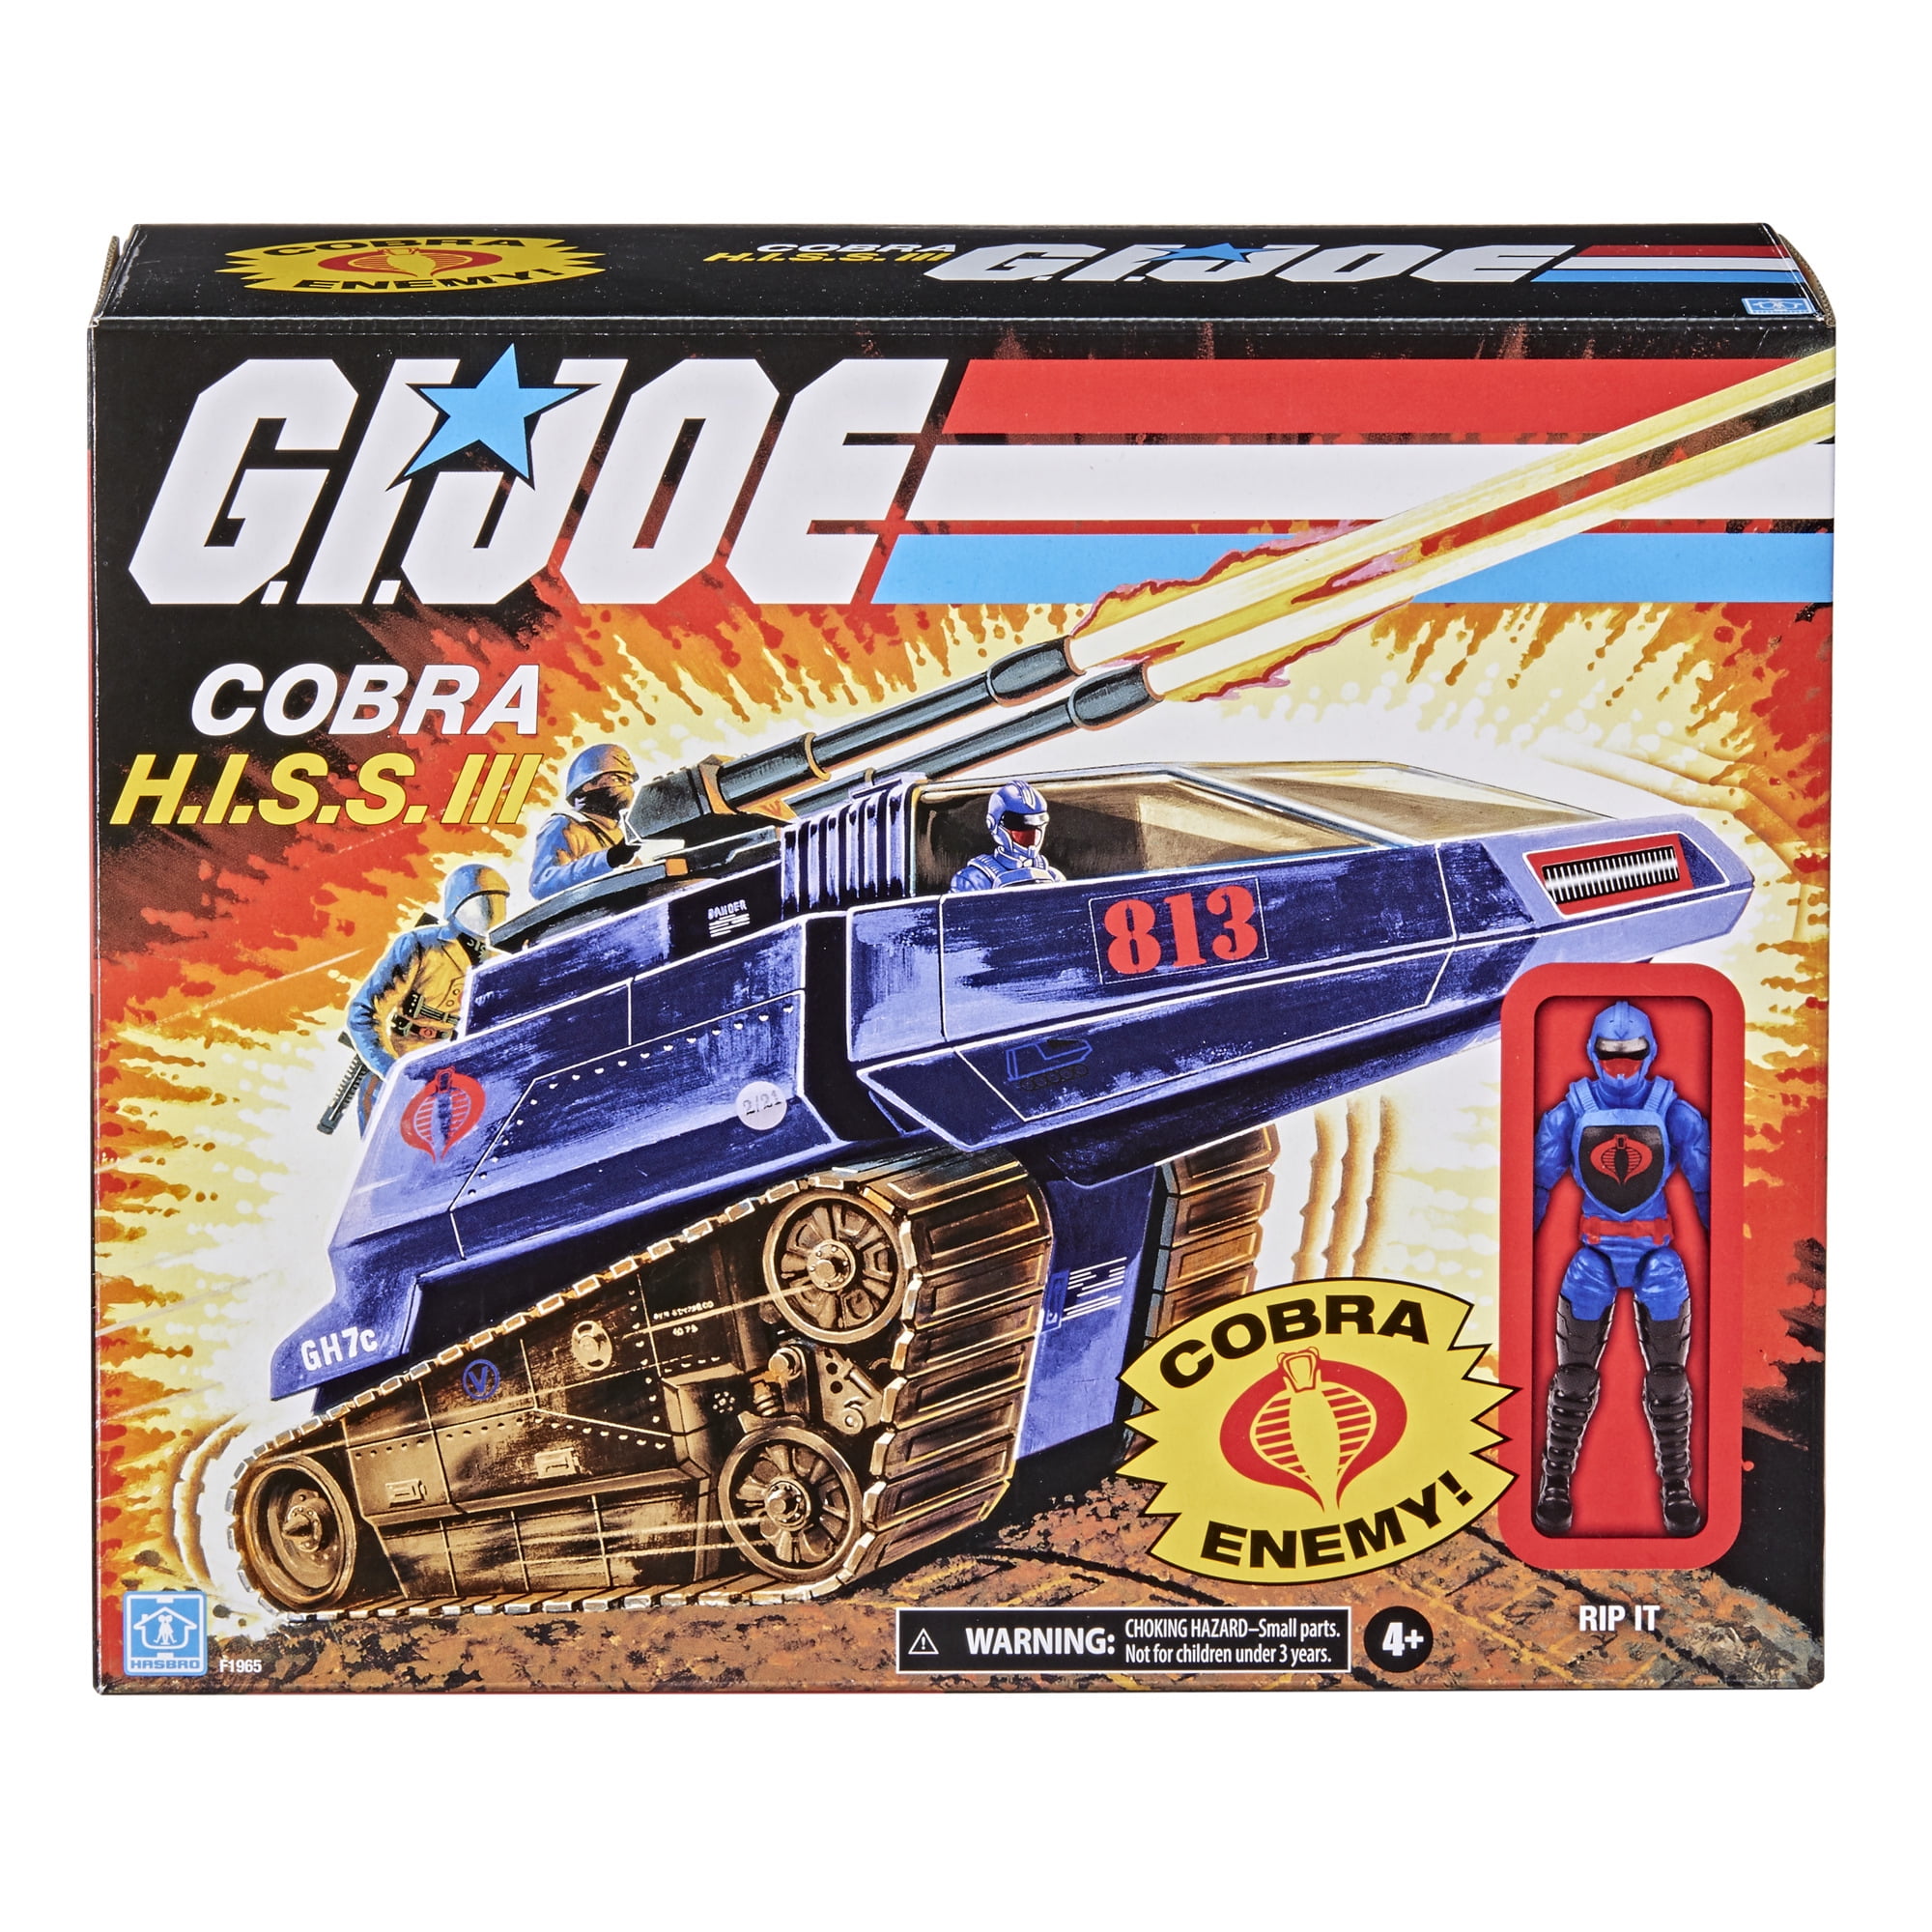 Hasbro Target 25th Gi Joe Cobra Hiss Tank Driver Vehicle Action Figure for sale online 